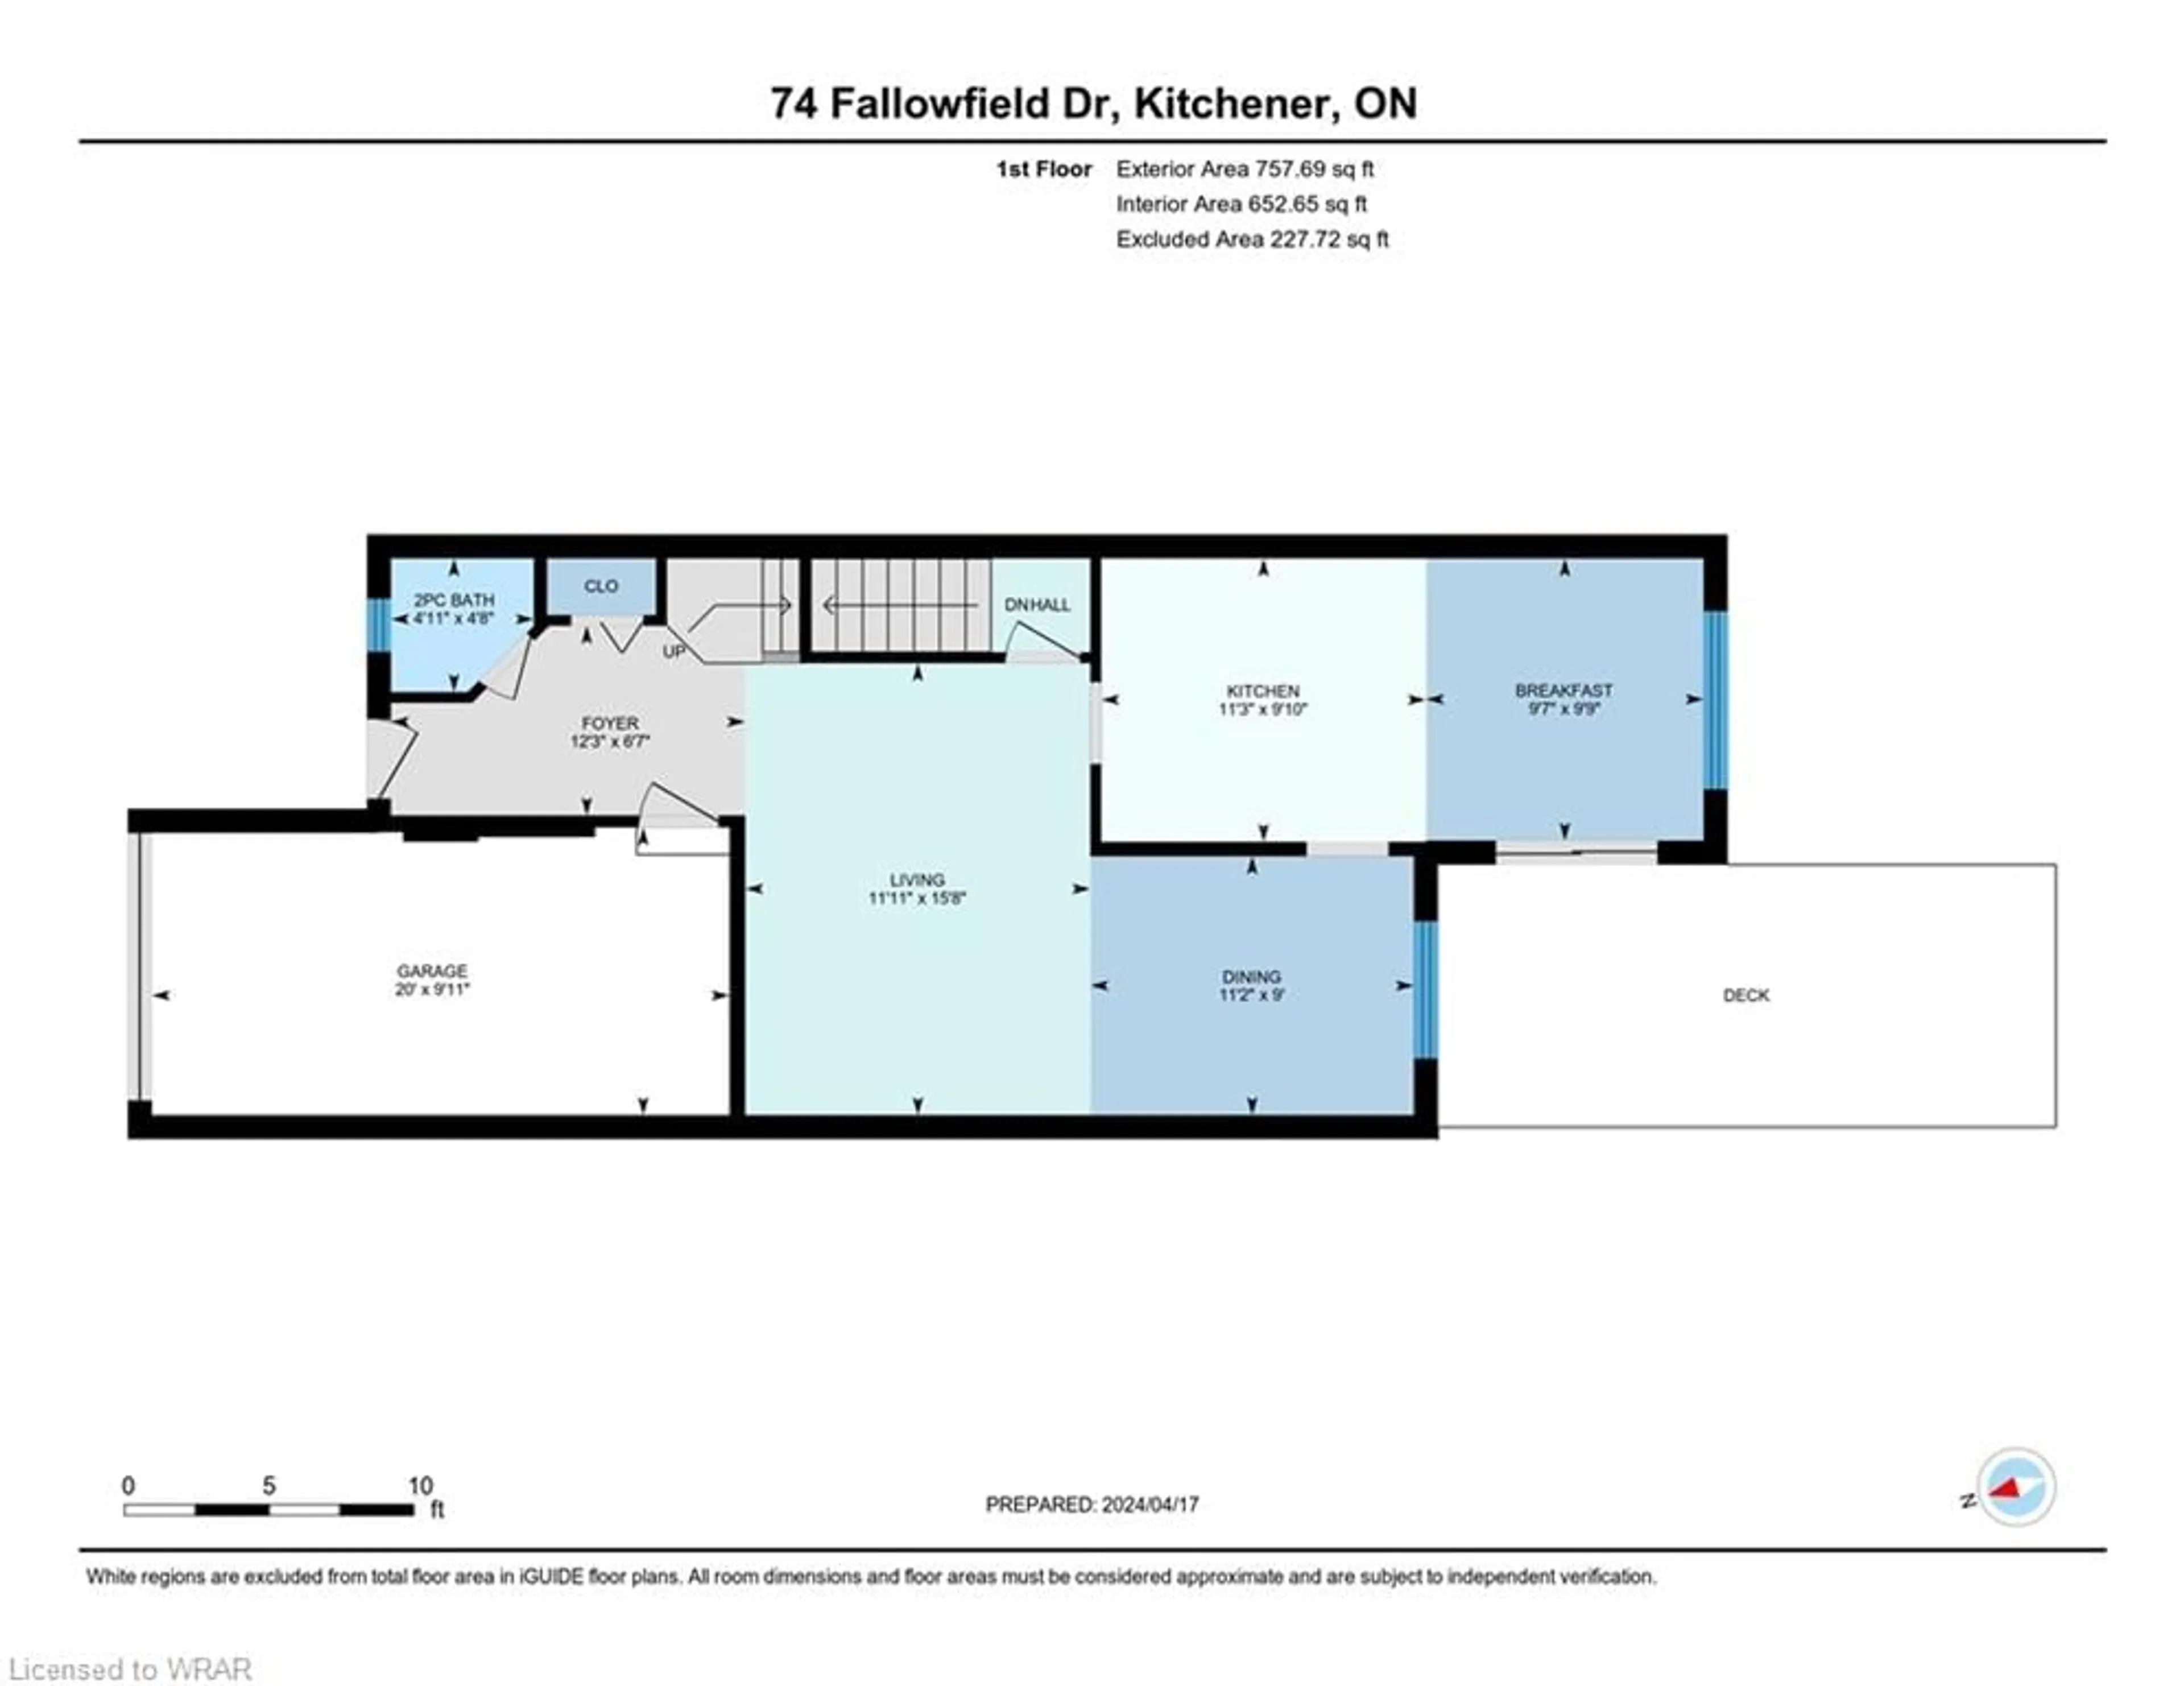 Floor plan for 74 Fallowfield Dr, Kitchener Ontario N2C 2T3